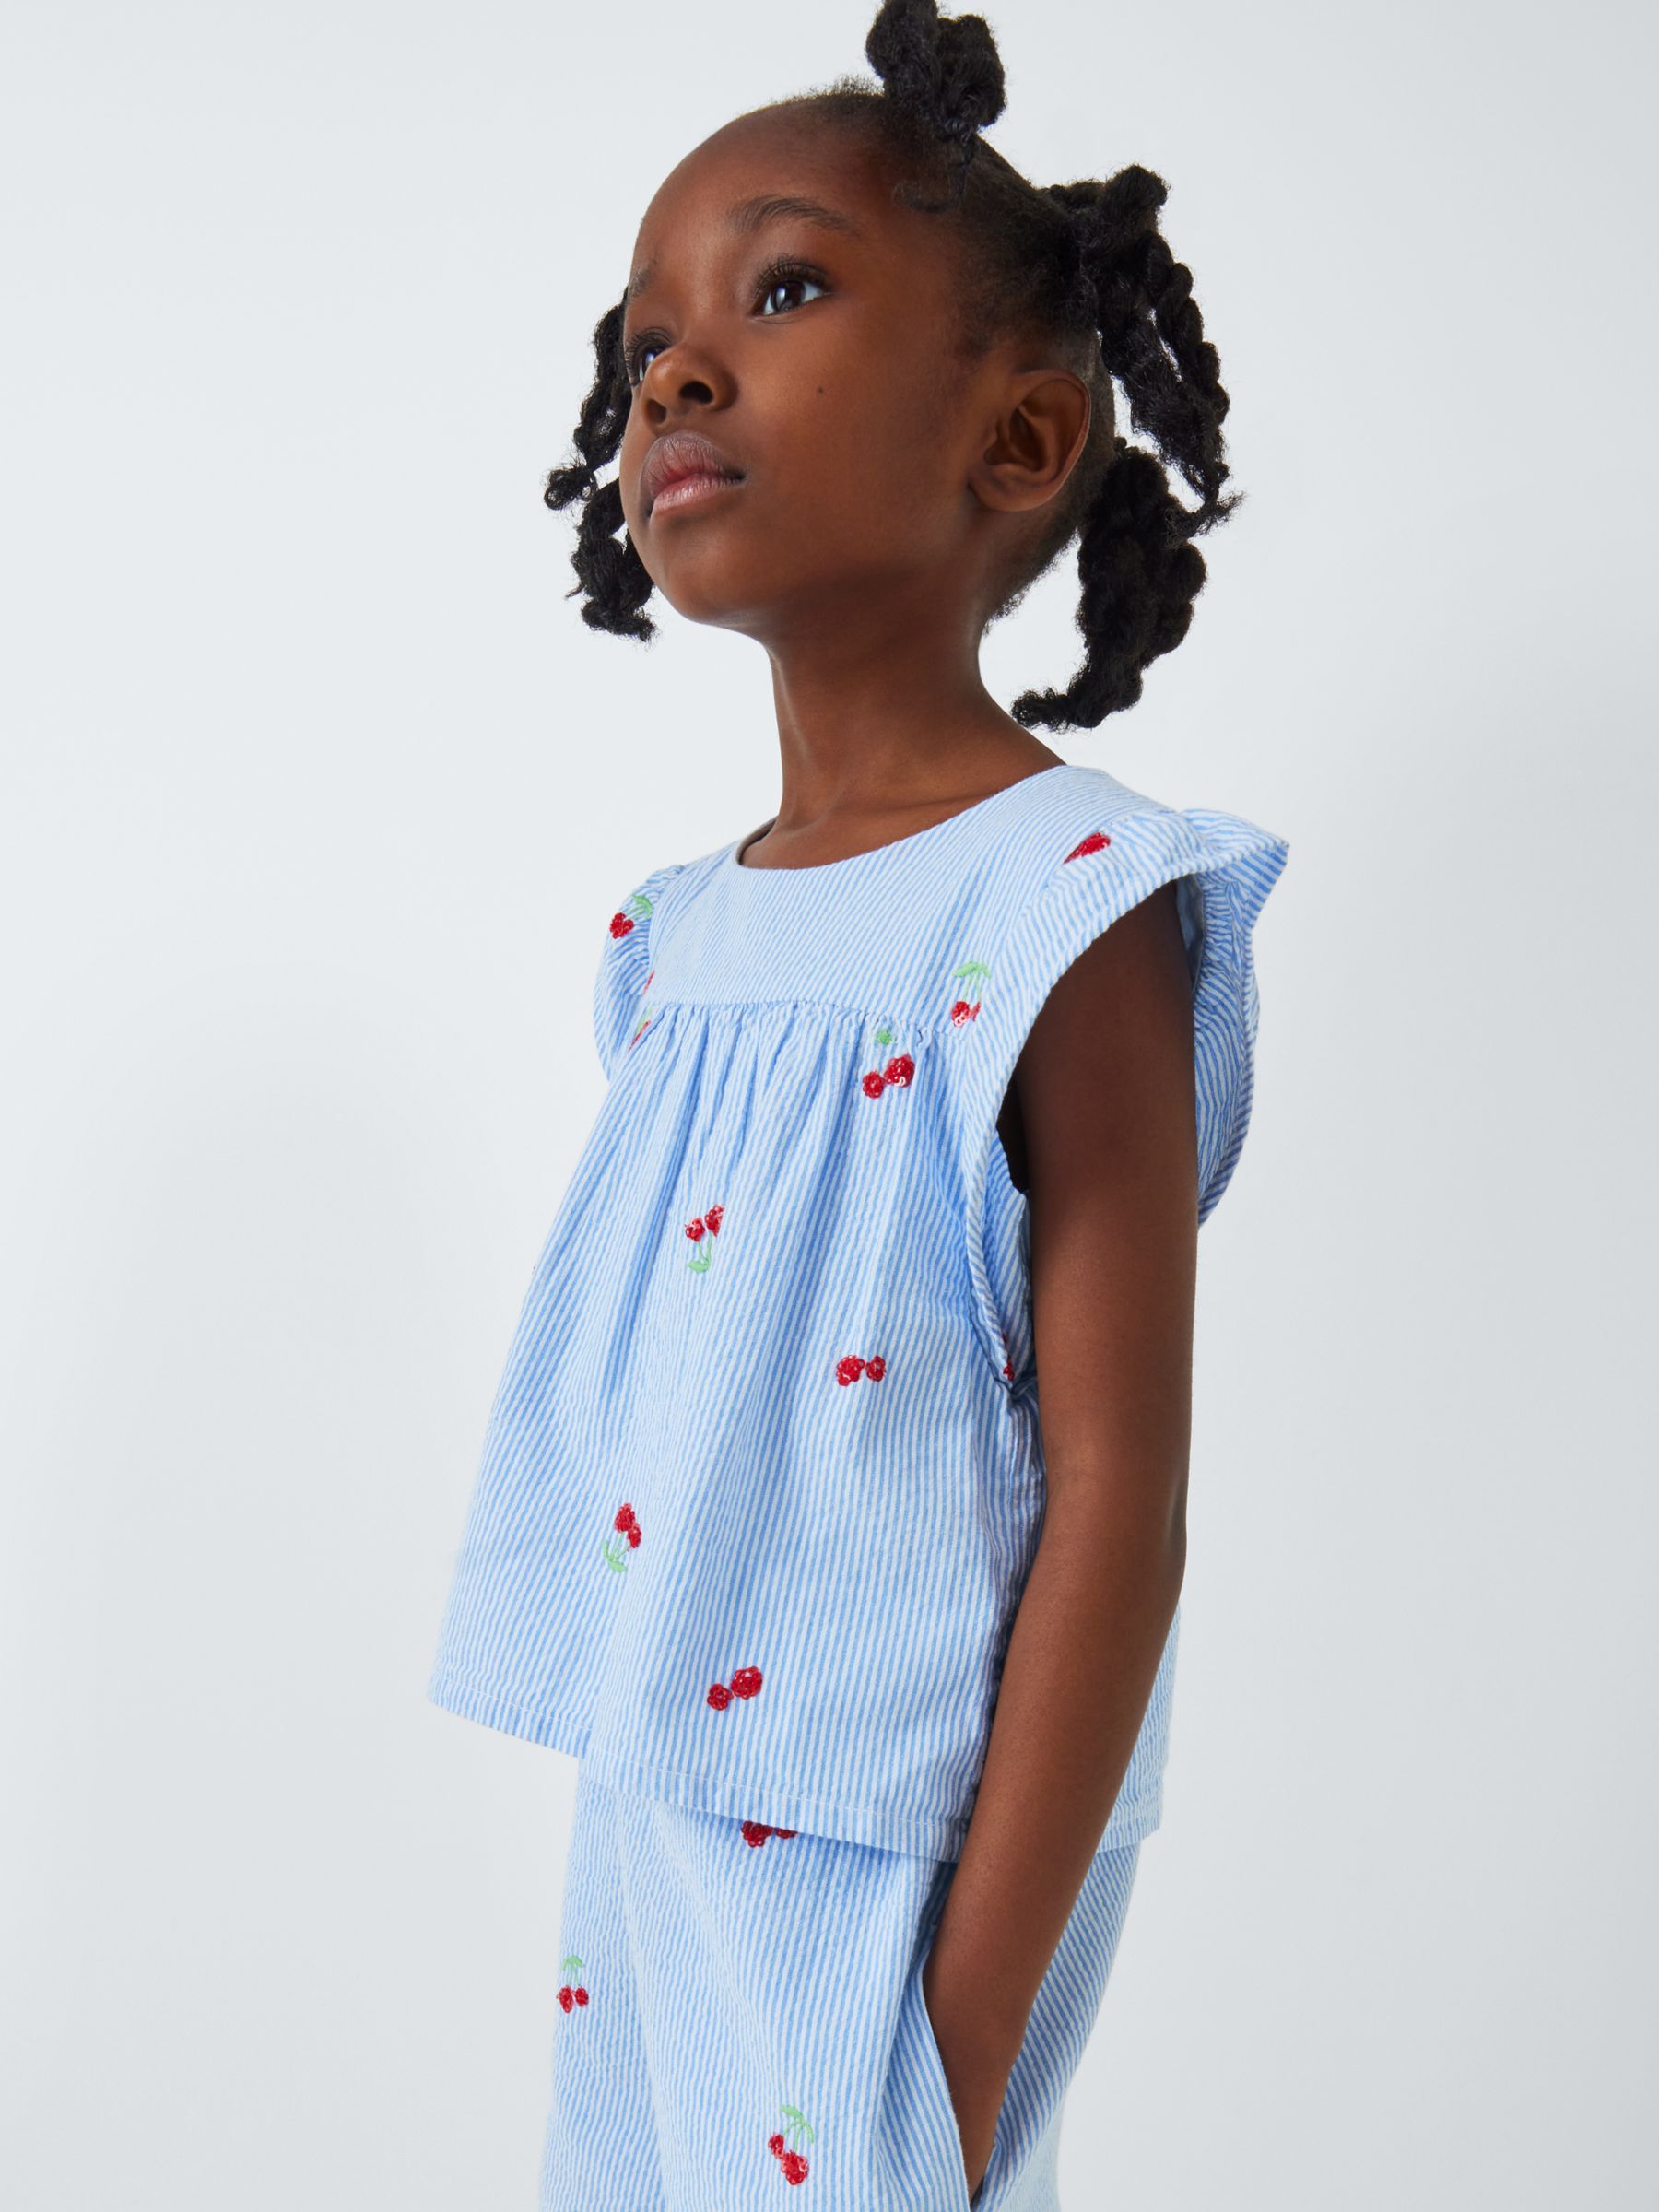 Buy John Lewis Kids' Embroidered Cherry Stripe Print Playsuit, Blue/White Online at johnlewis.com